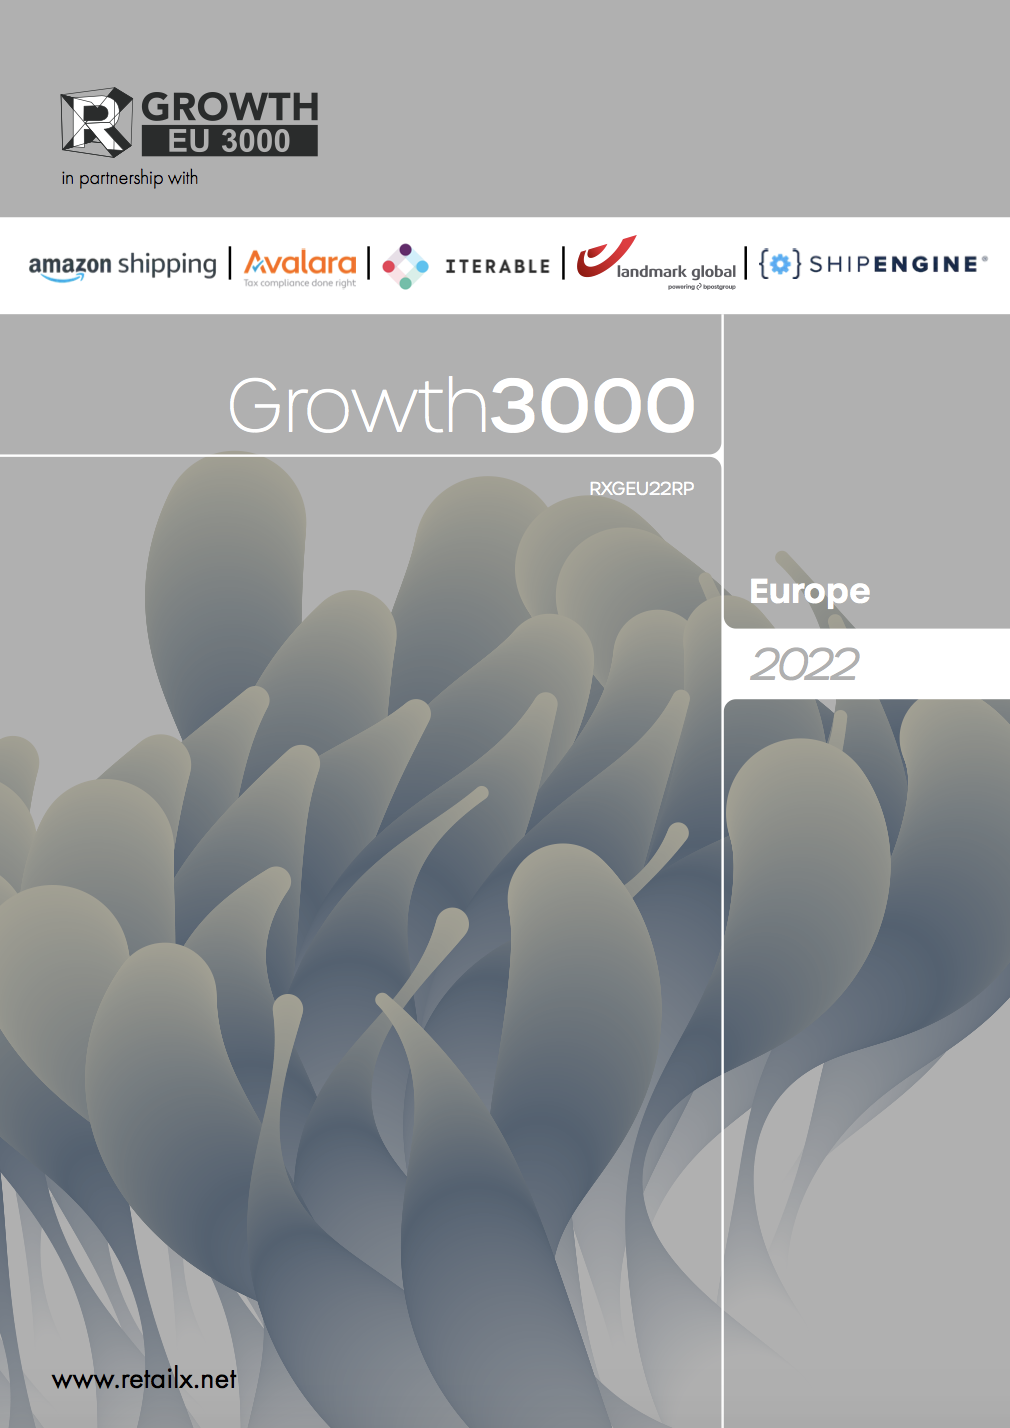 The 2022 RetailX Europe Growth 3000